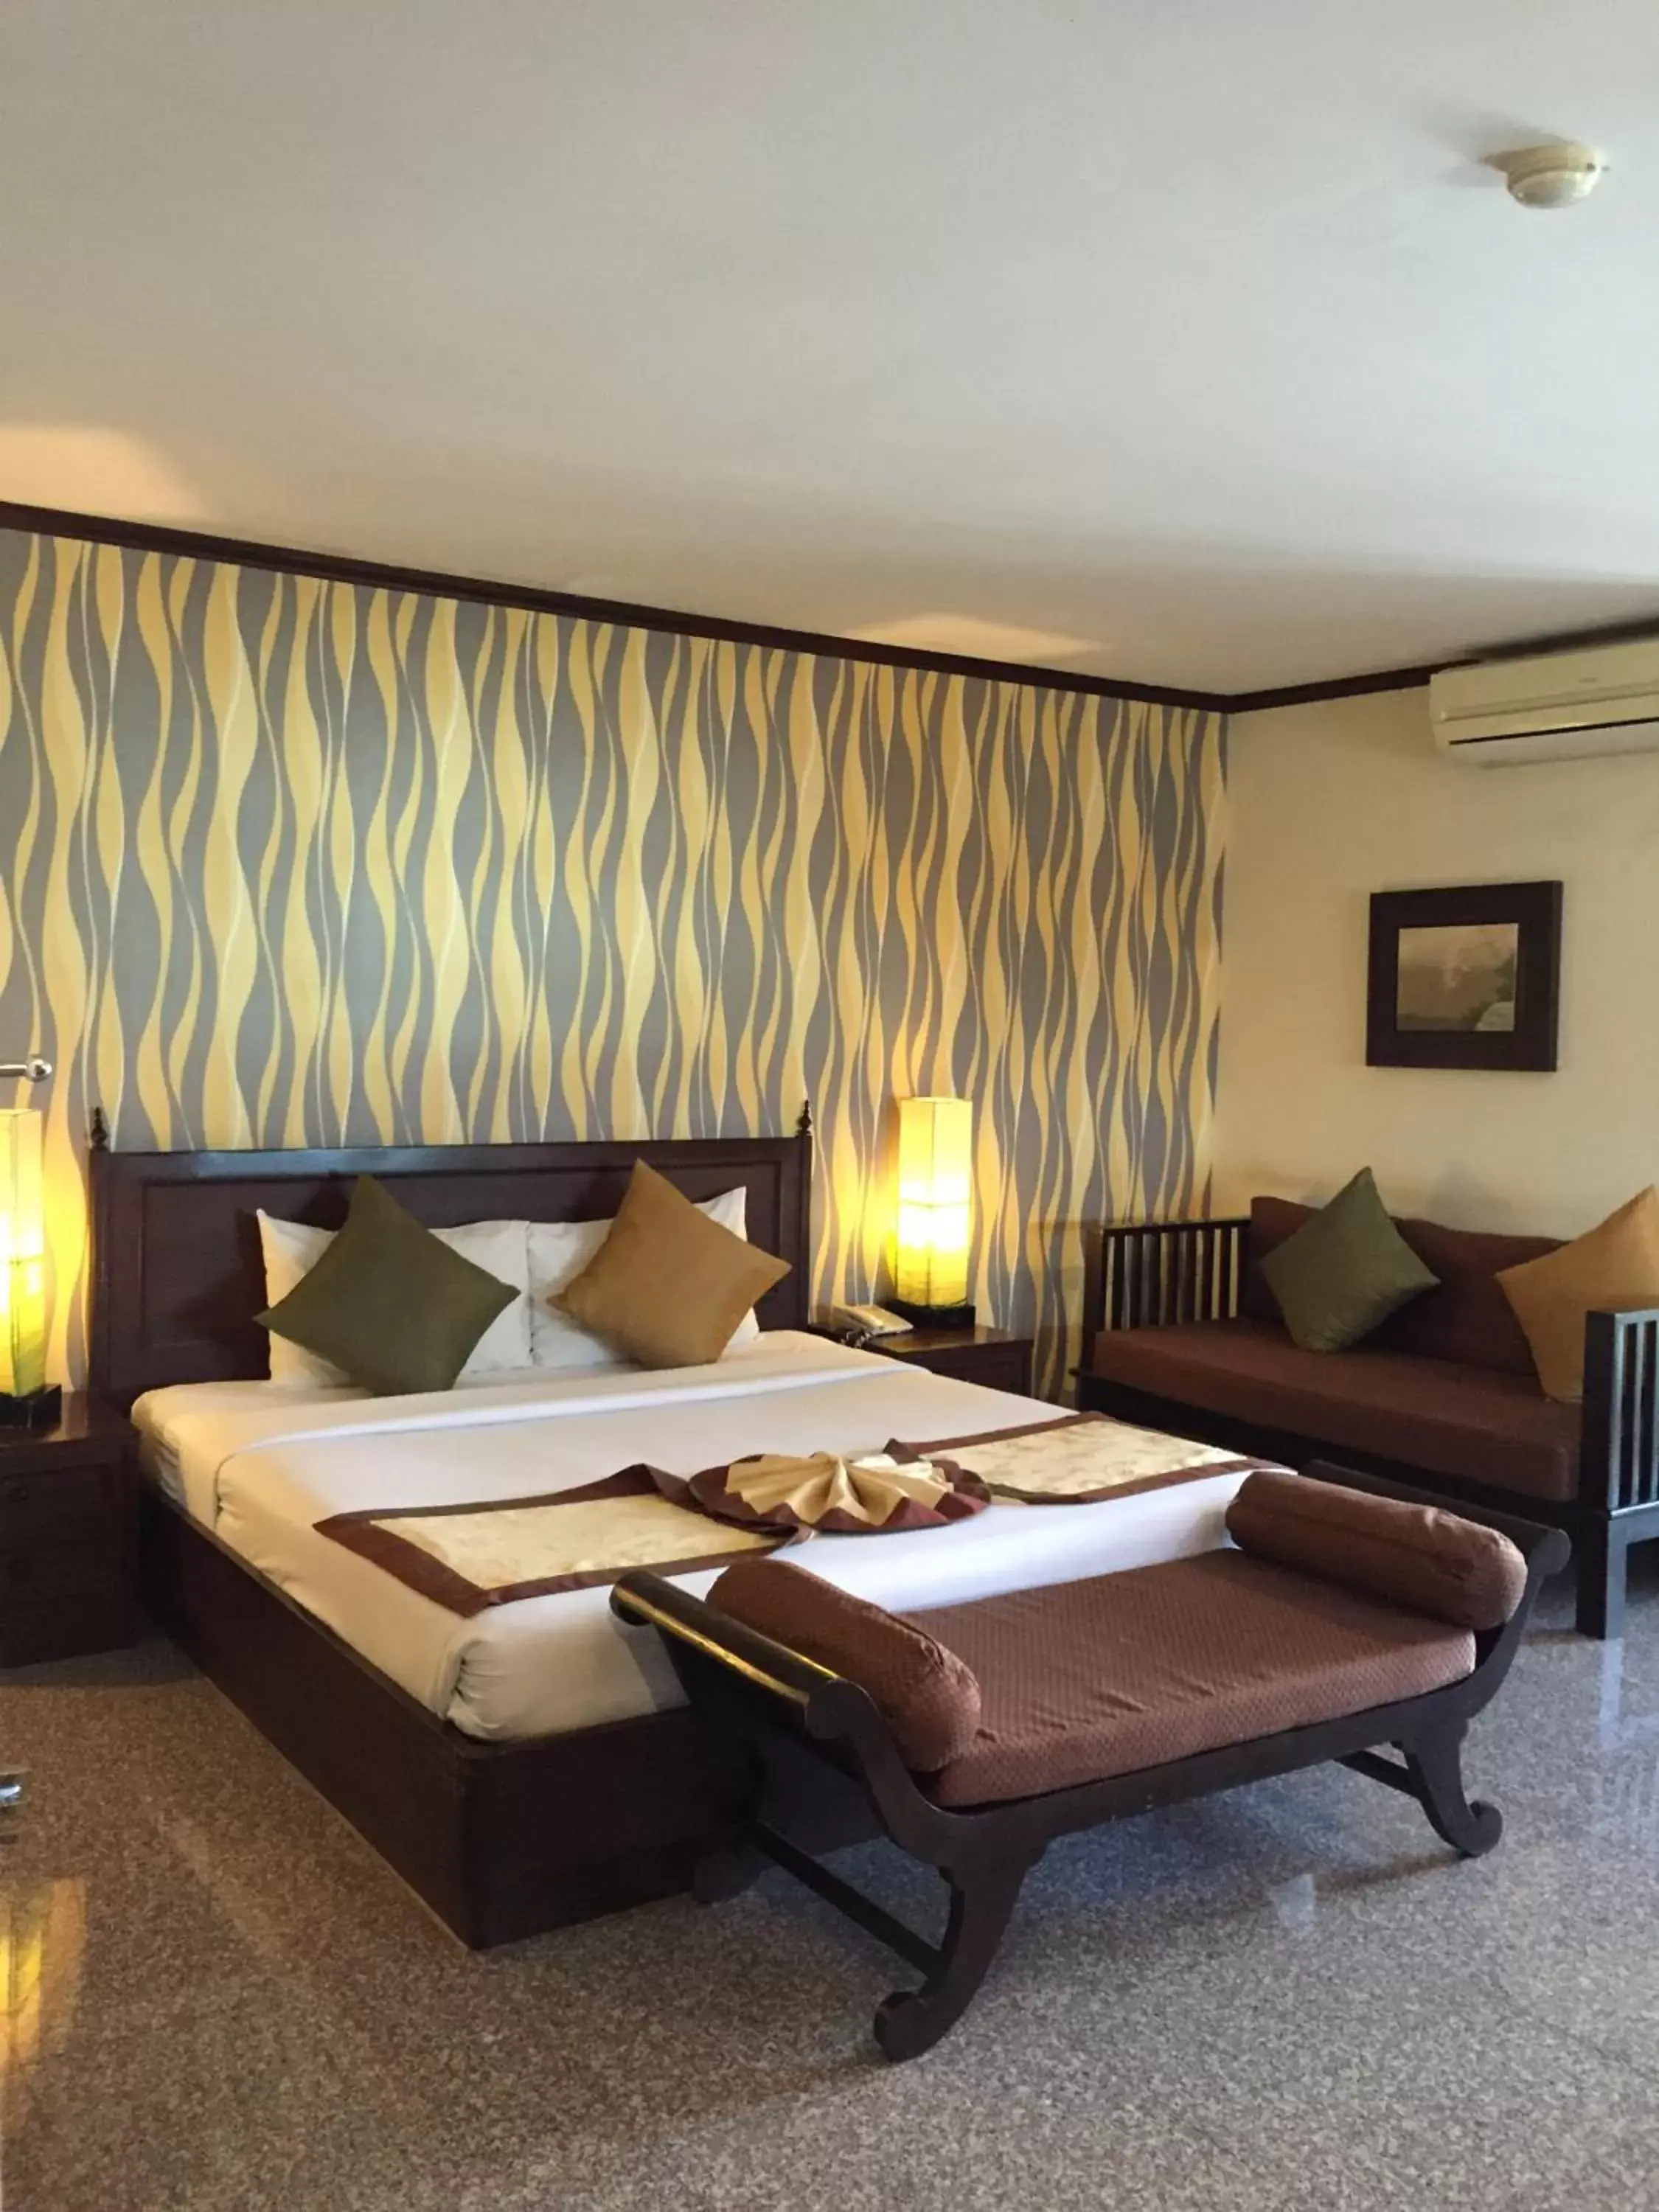 Bed, Room Photo in Royal Peninsula Hotel Chiangmai